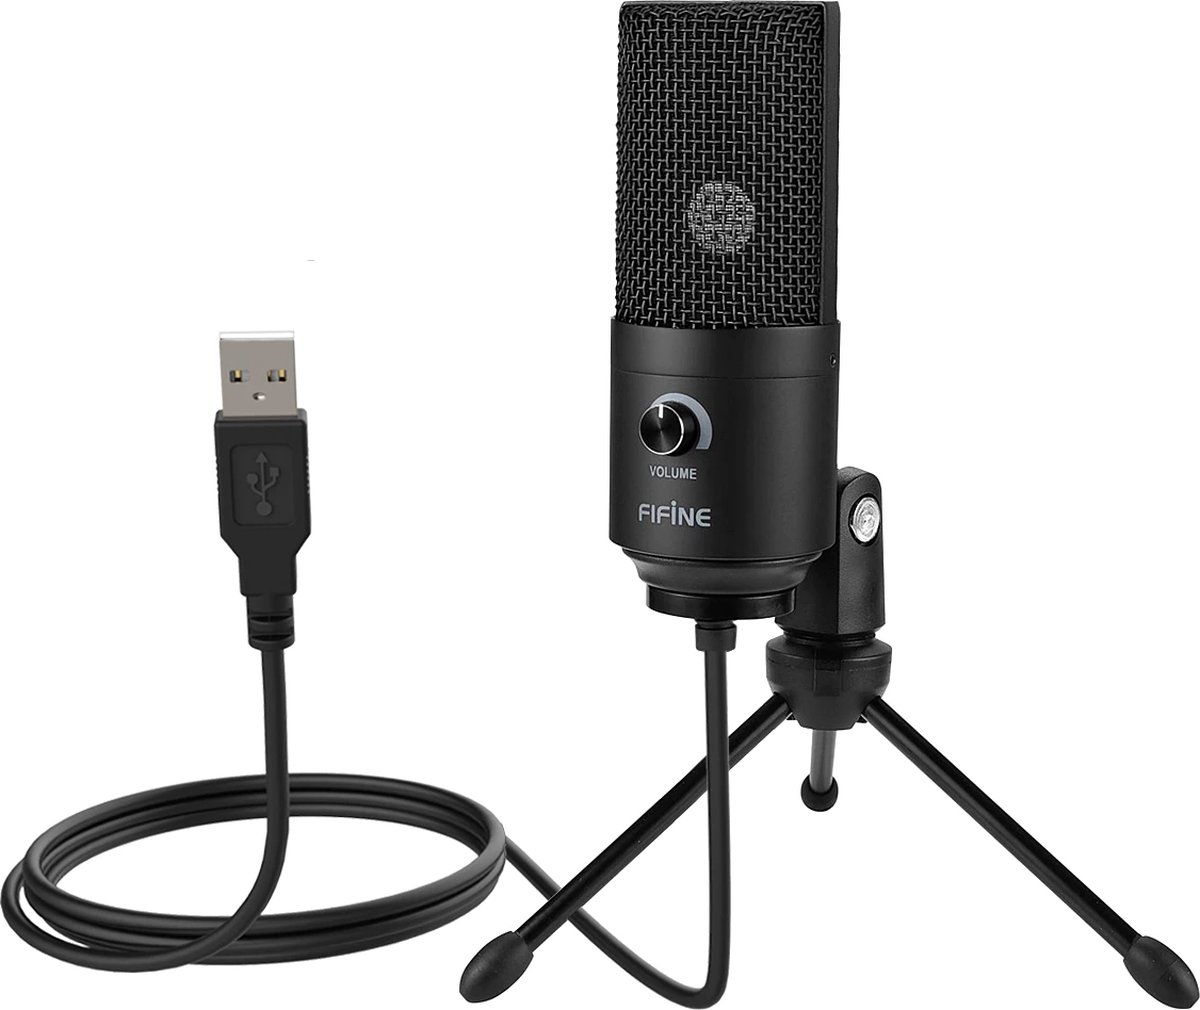 Studio Microfoon - Opname Microfoon - Zwart - USB Aansluiting - Recording - Laptop - Computer Microfoon - Plug en Play - Voice Over